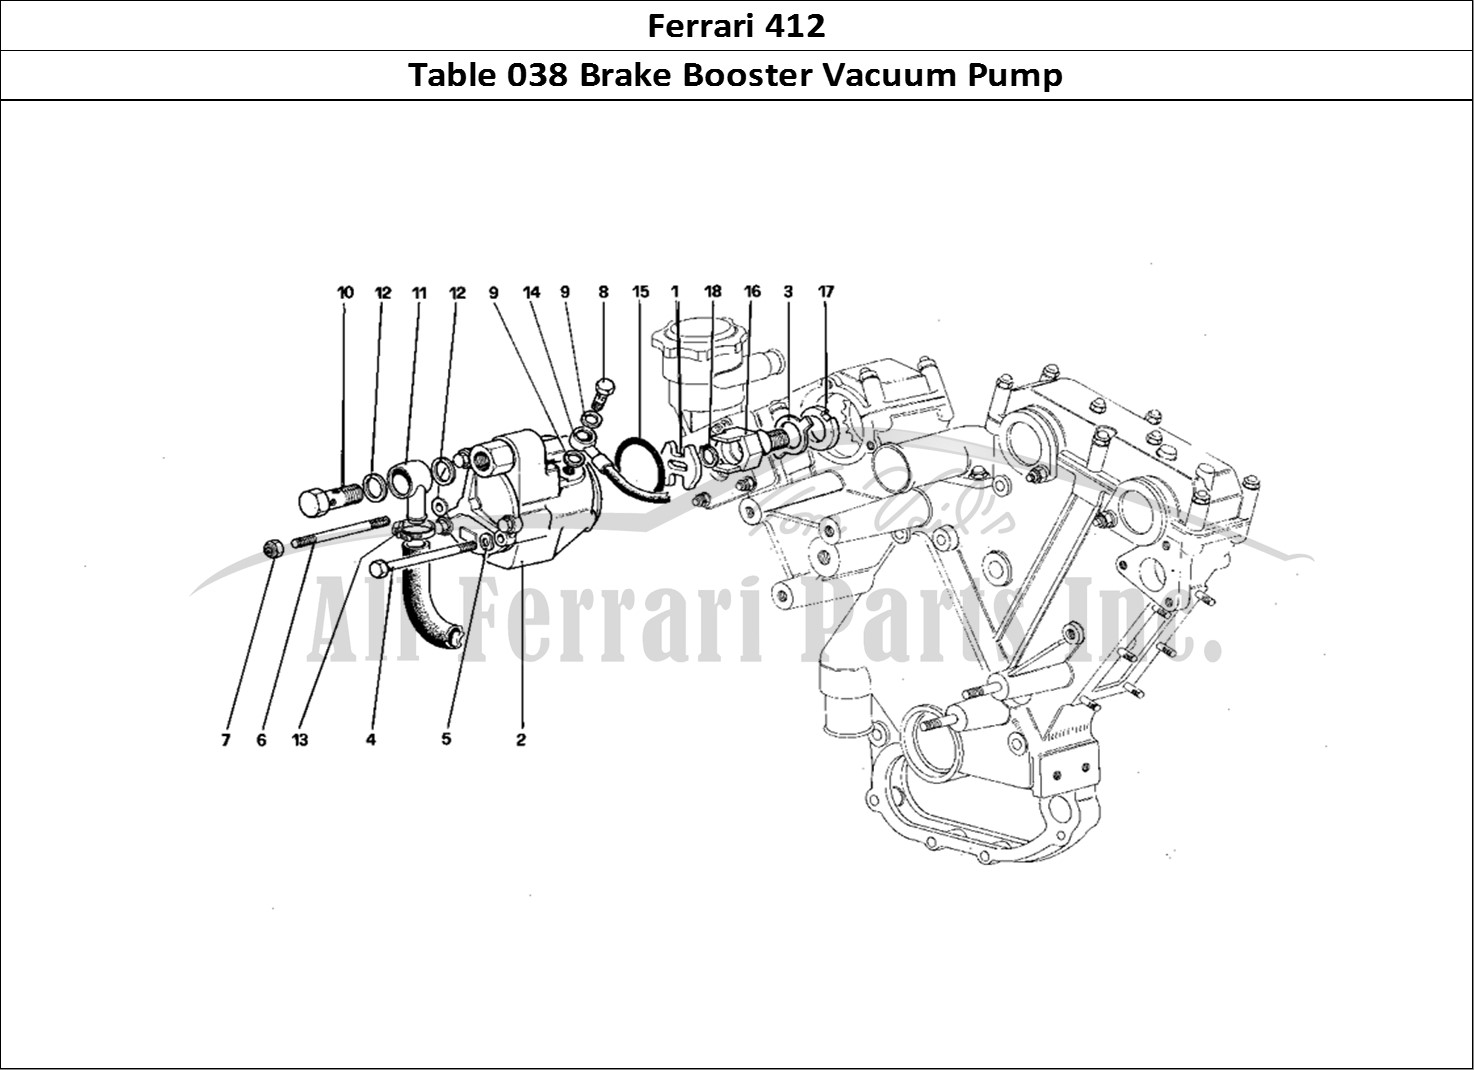 Ferrari Parts Ferrari 412 (Mechanical) Page 038 Brake Booster Vacuum Pump